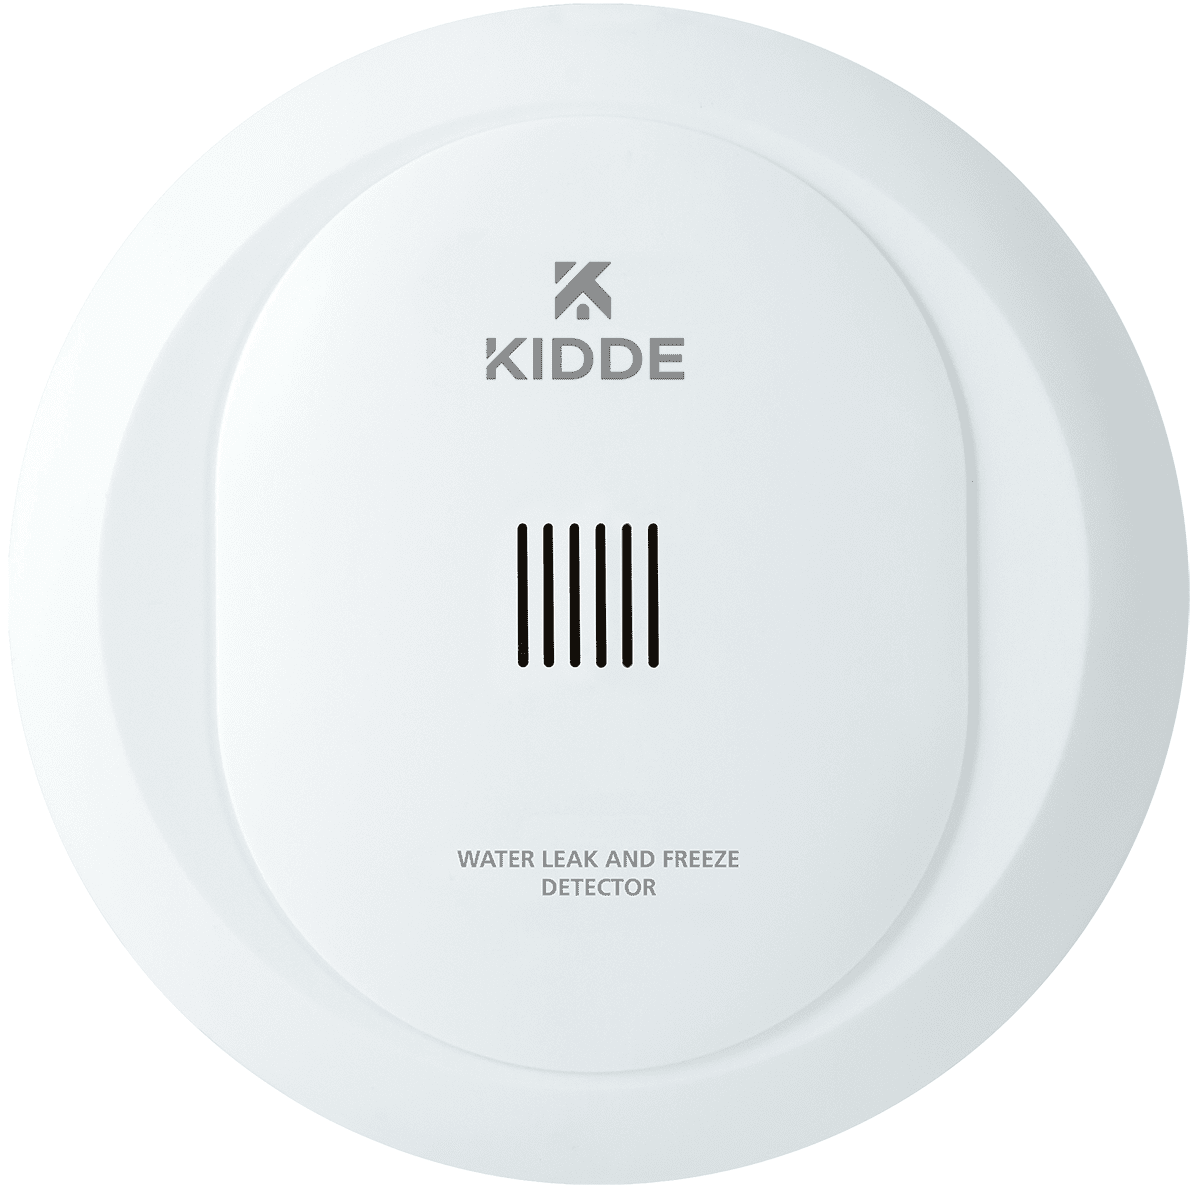 Kidde 60WLDR-W Smart Water Leak And Freeze Detector